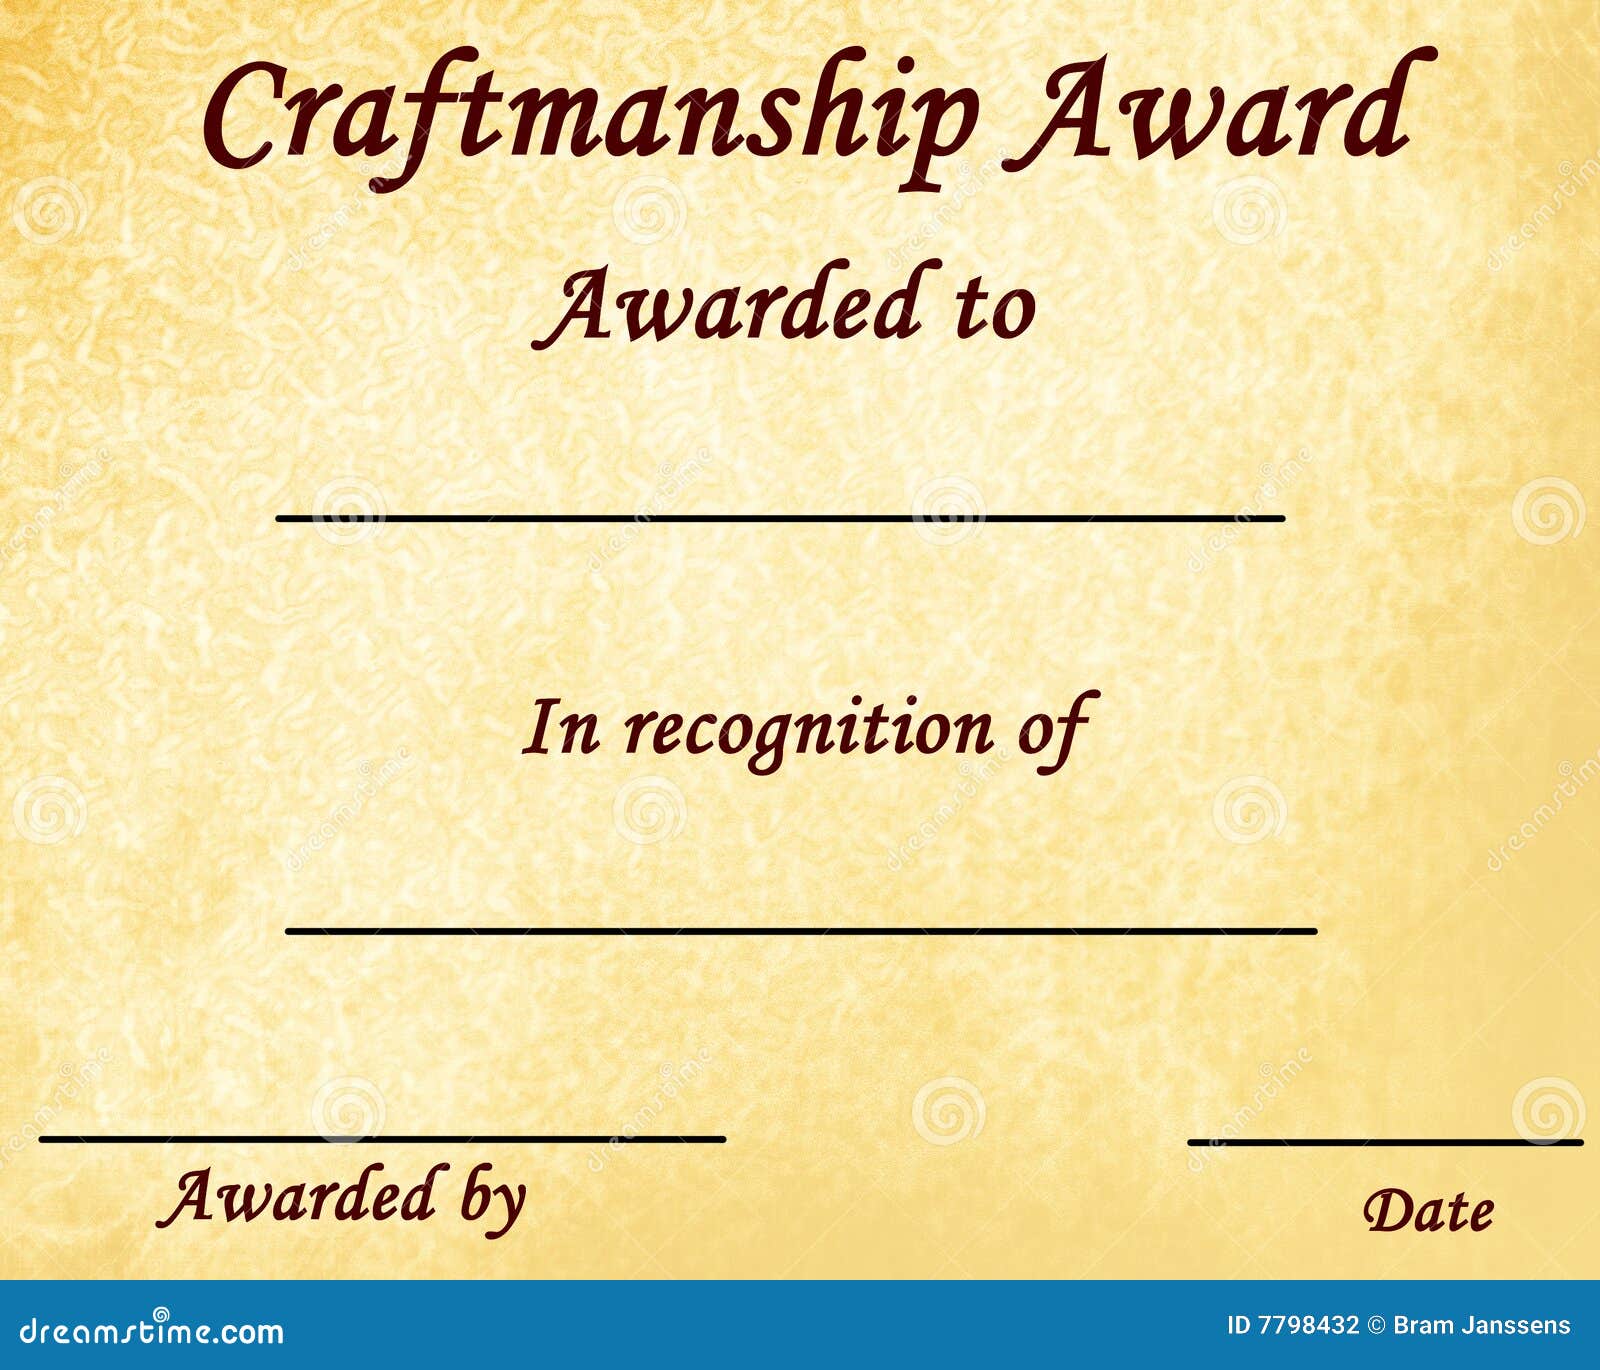 craftmanship award